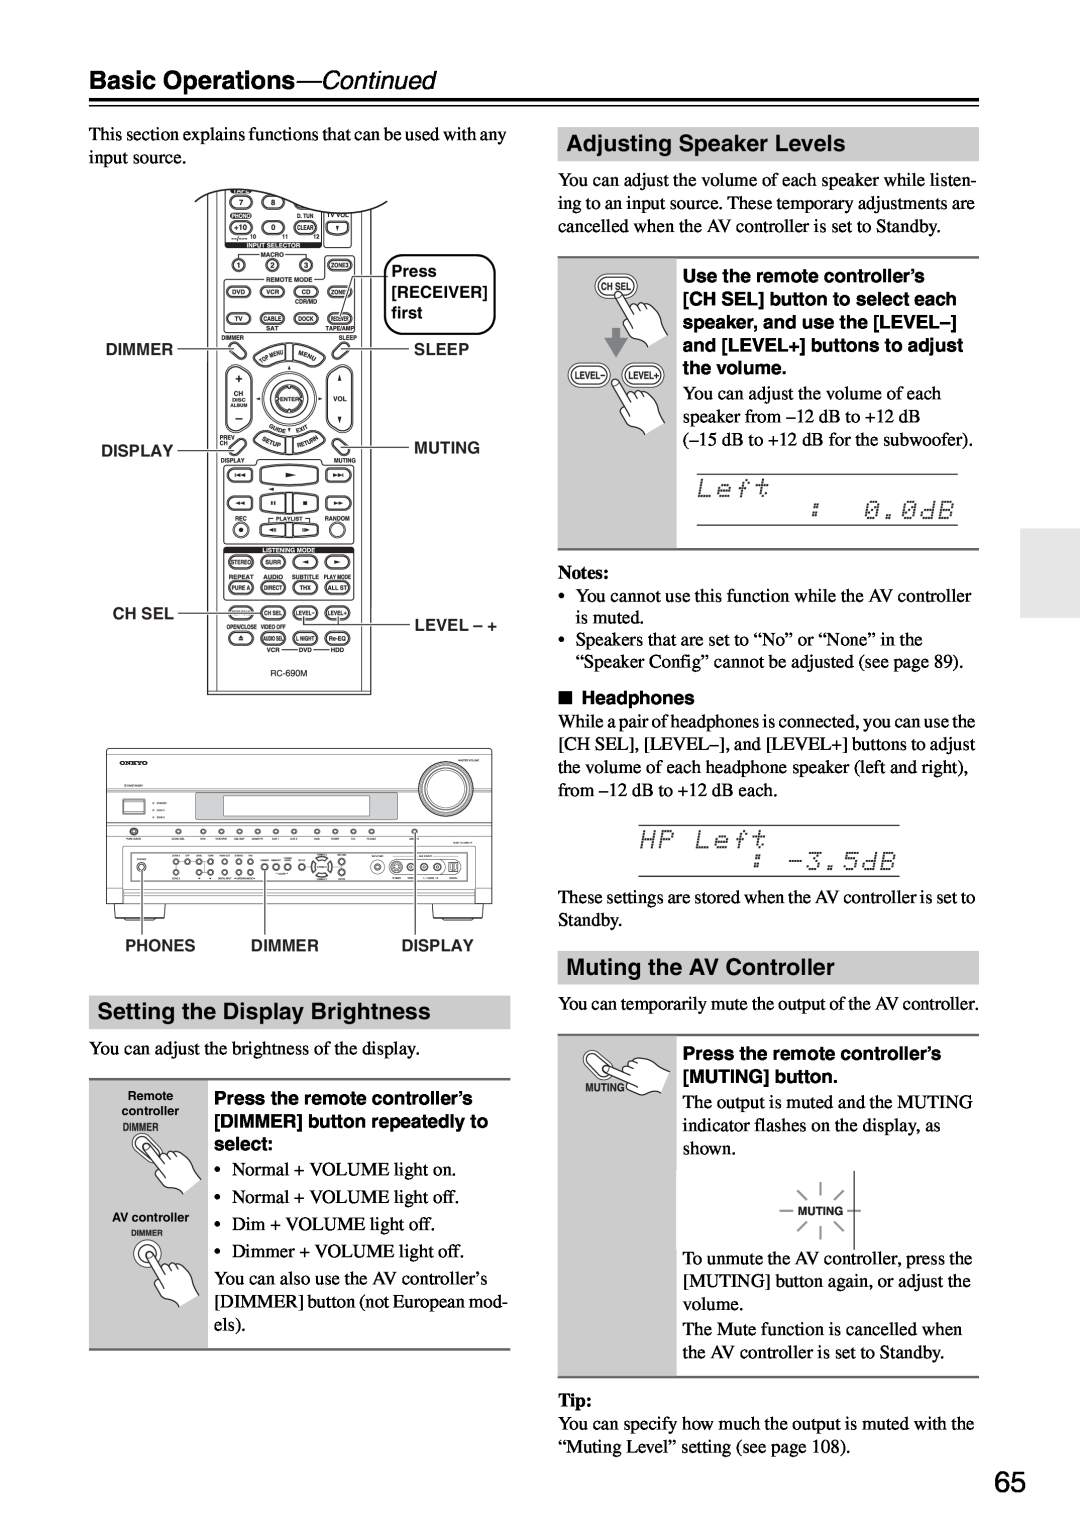 Onkyo PR-SC886 Basic Operations—Continued, Setting the Display Brightness, Adjusting Speaker Levels, Notes 